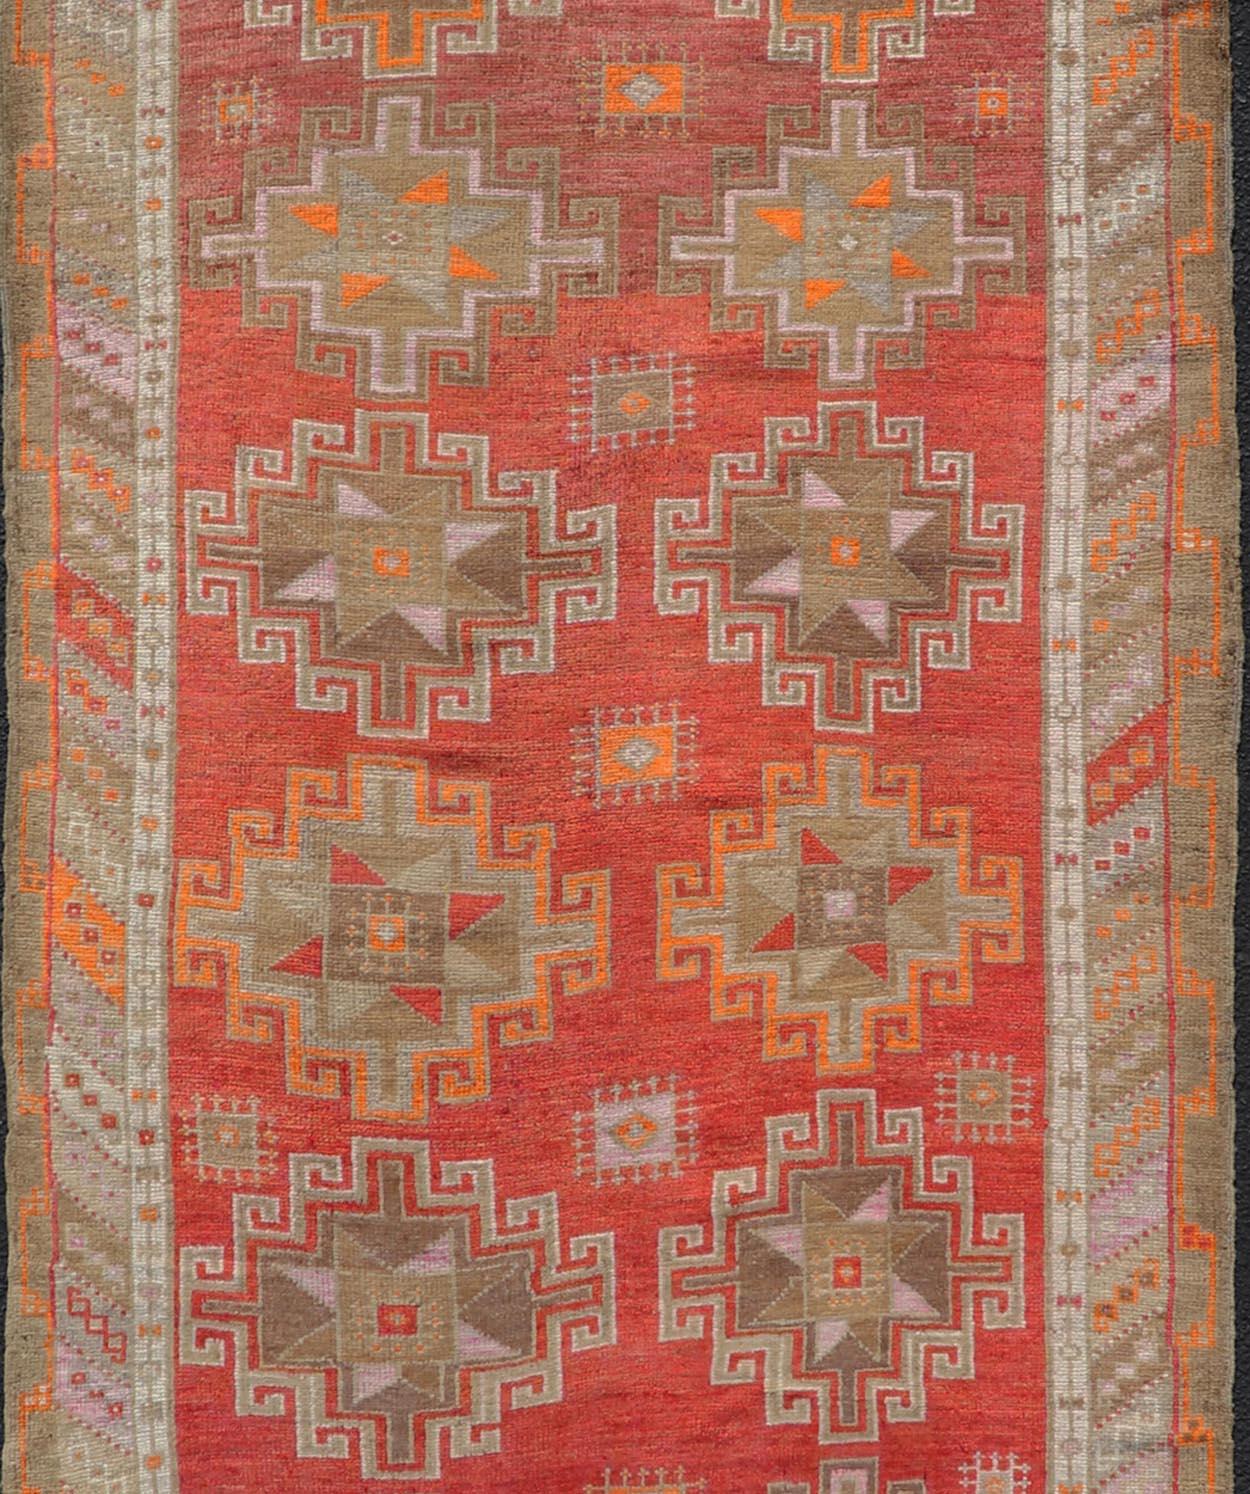 Vintage Turkish Kars/Oushak Gallery runner in red, brown, pink, ivory, orange and tan Keivan Woven Arts / rug/EMB-9671-P13566, country of origin / type: Turkey / Oushak, circa 1940

Measures:4'4 x 11'7.